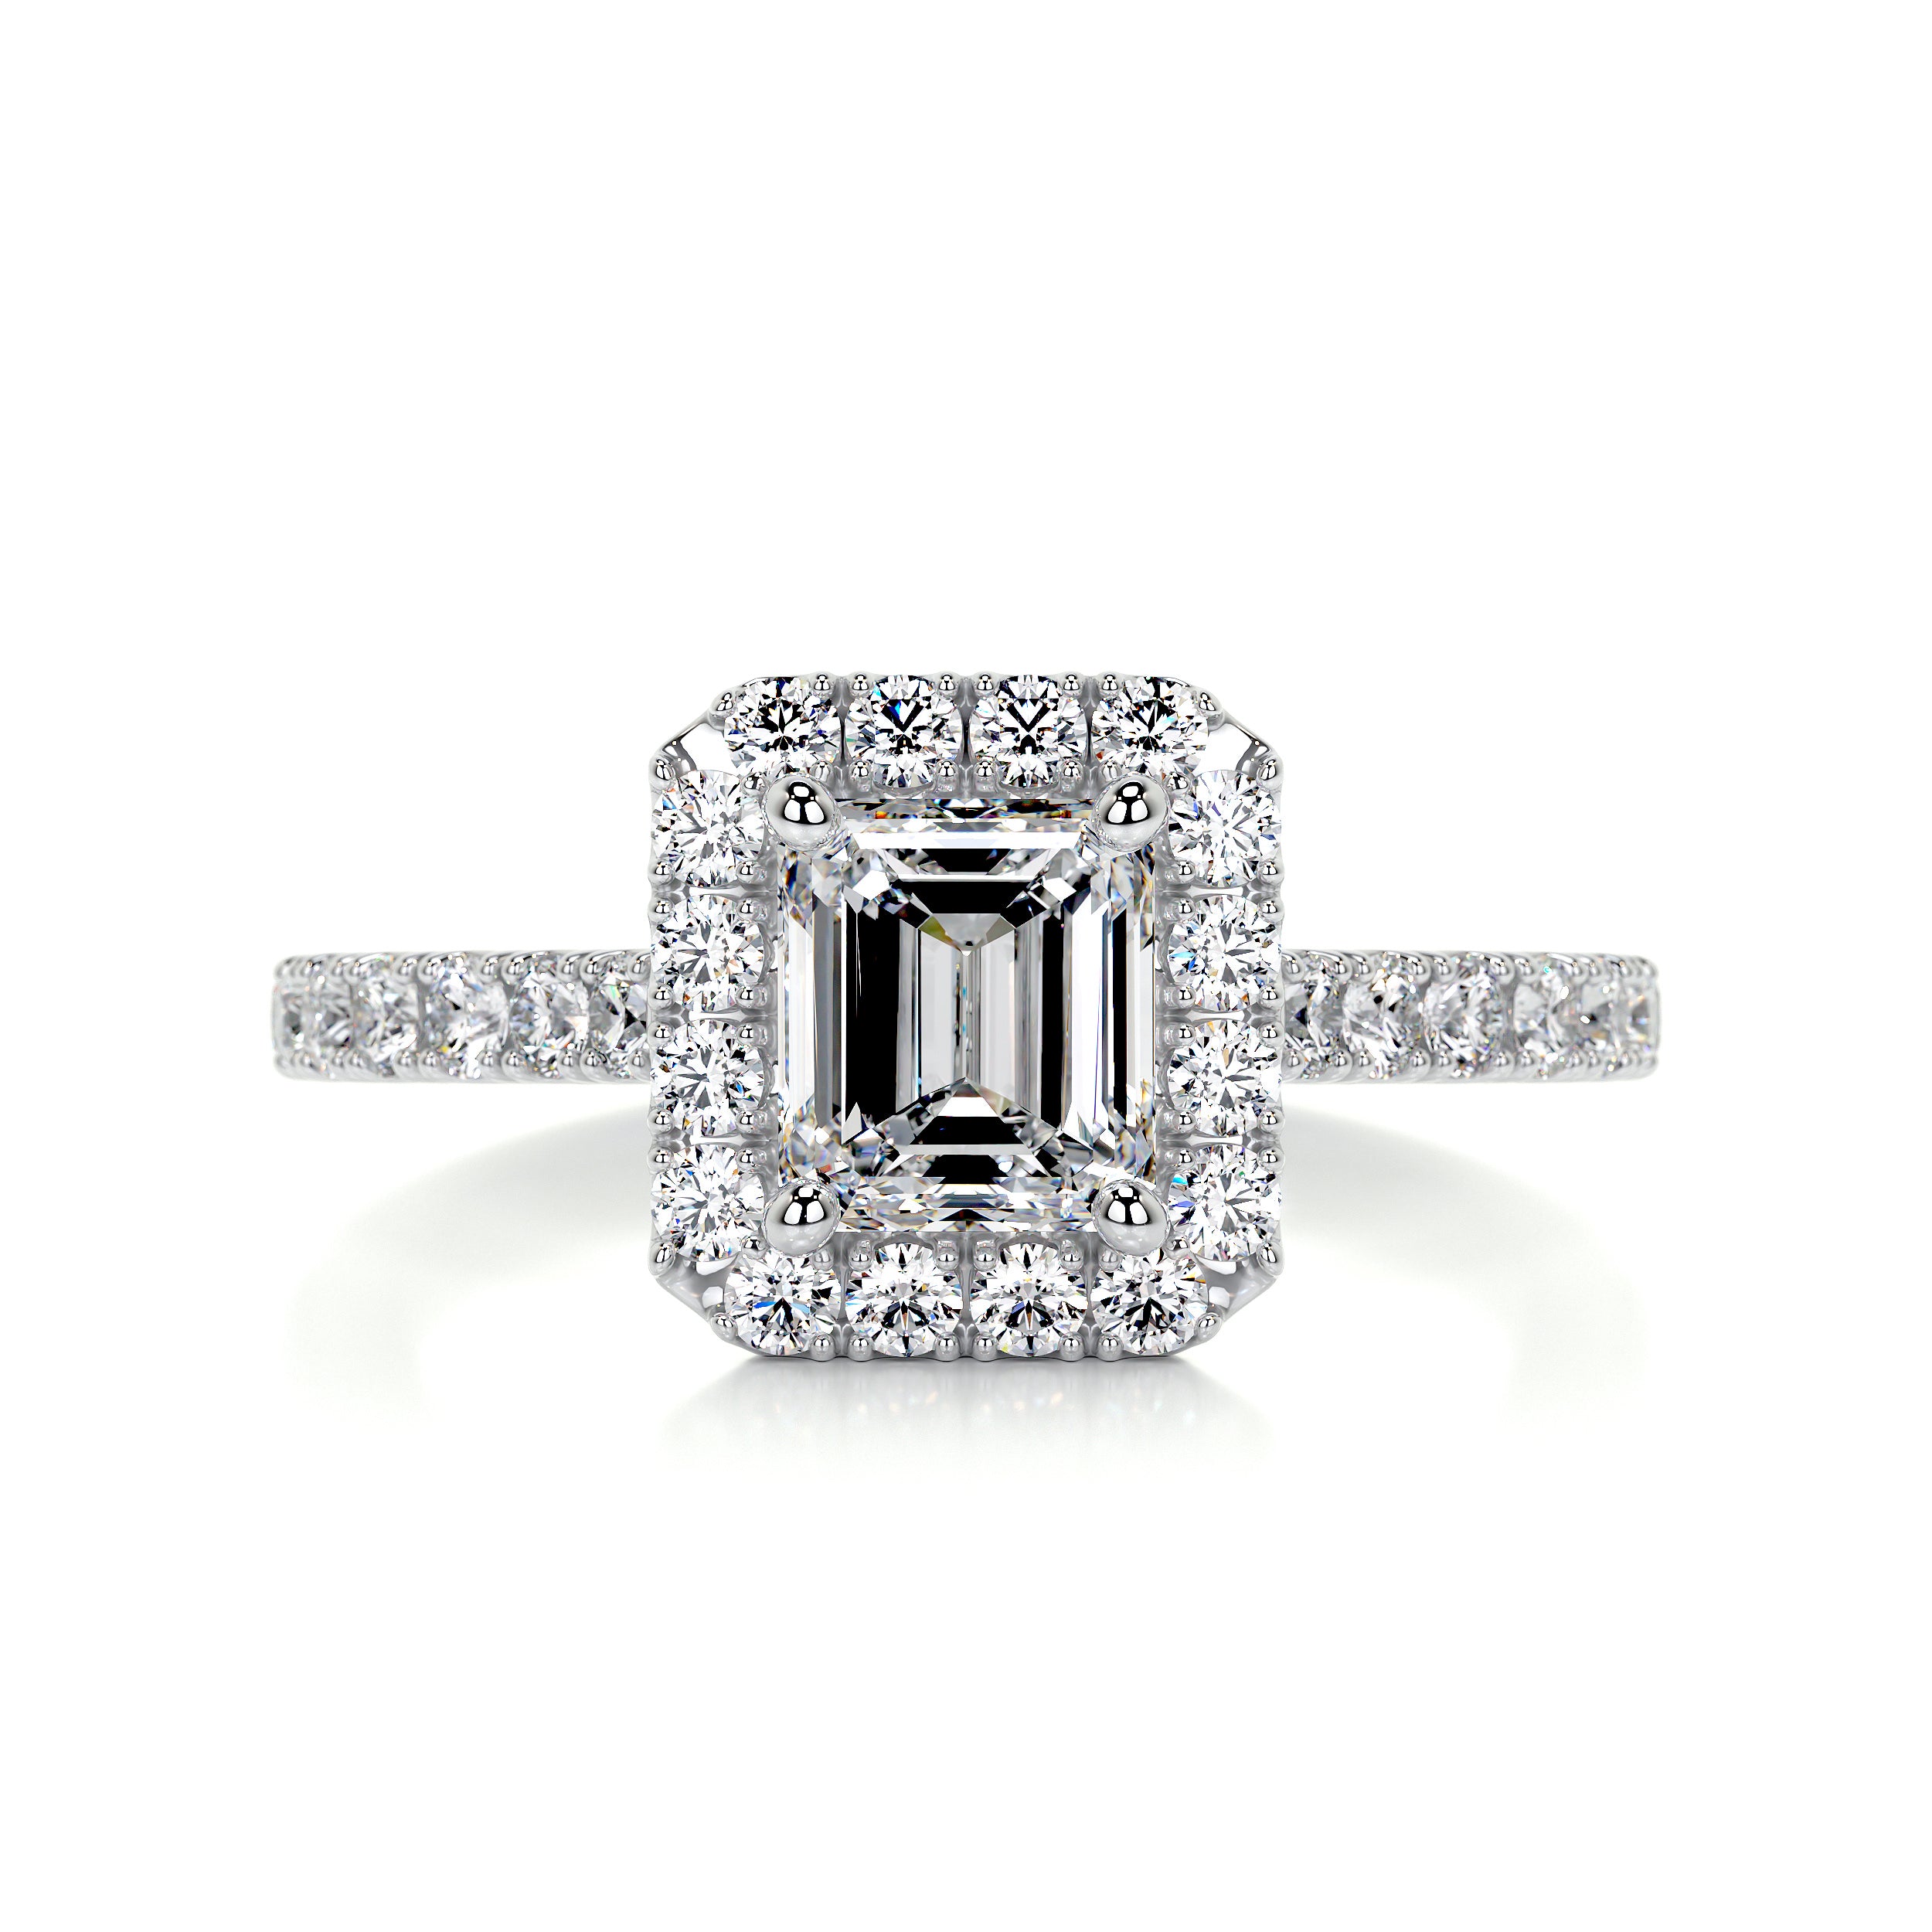 Zoey Diamond Engagement Ring   (1.5 Carat) -Platinum